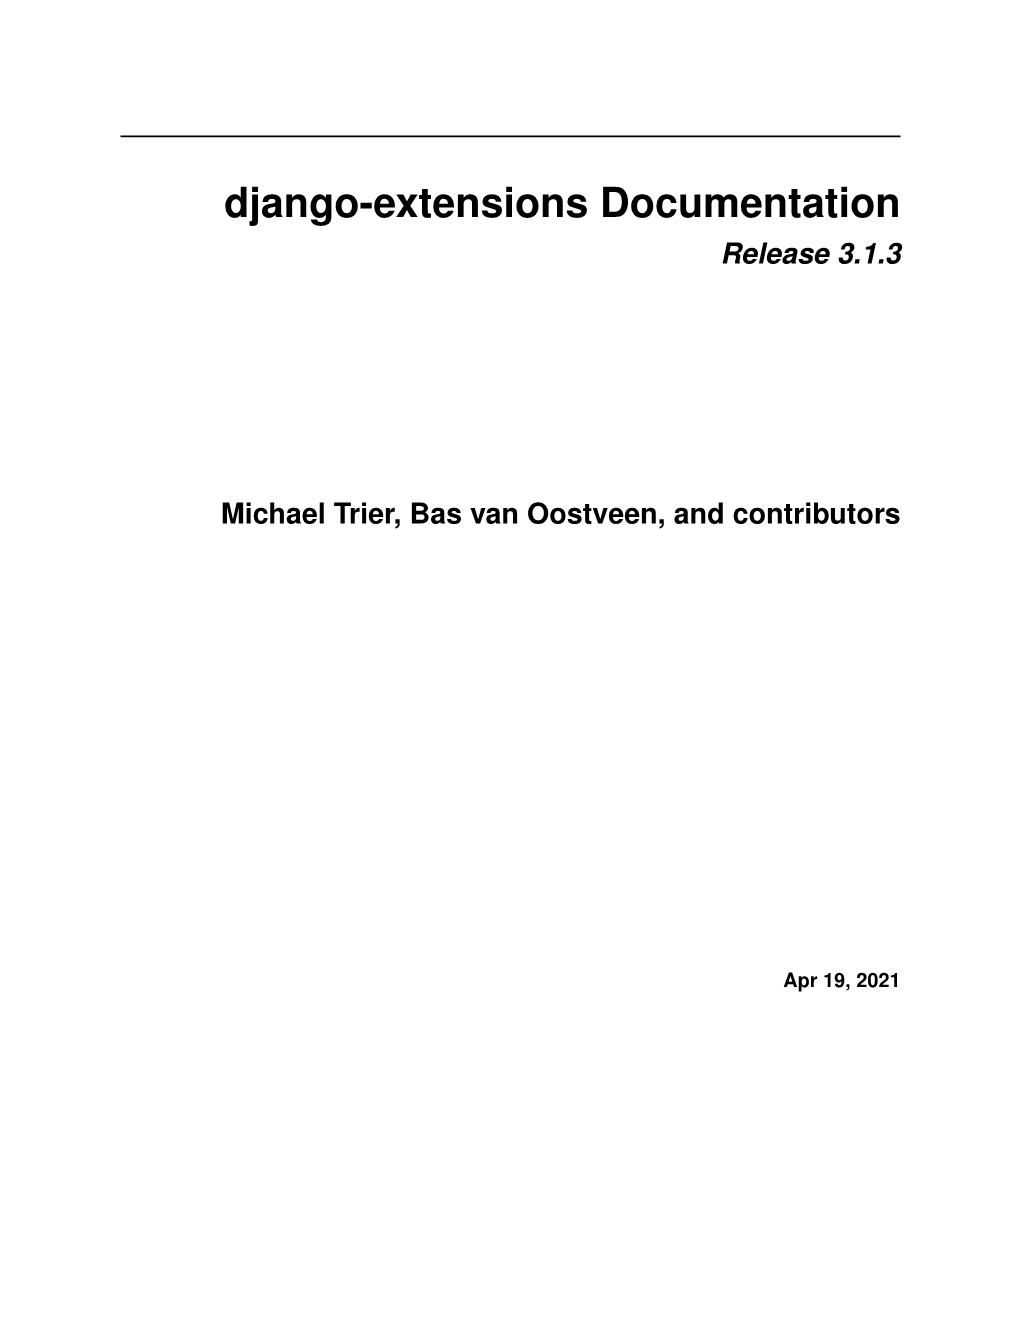 Django-Extensions Documentation Release 3.1.3